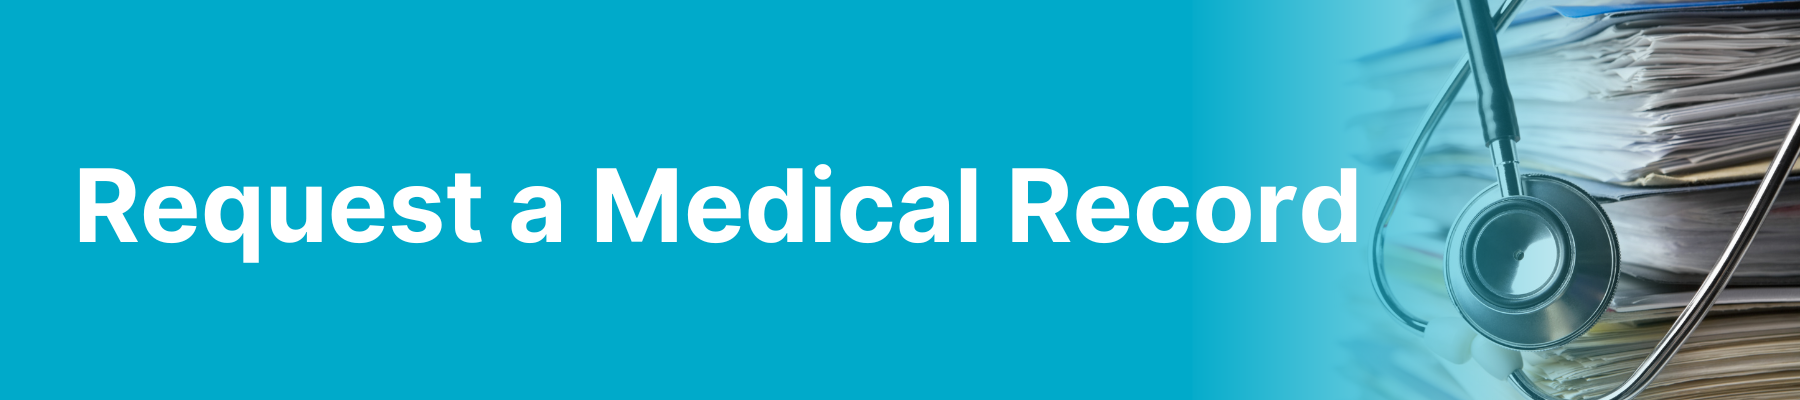 Request a Medical Record at the Cloquet Hospital